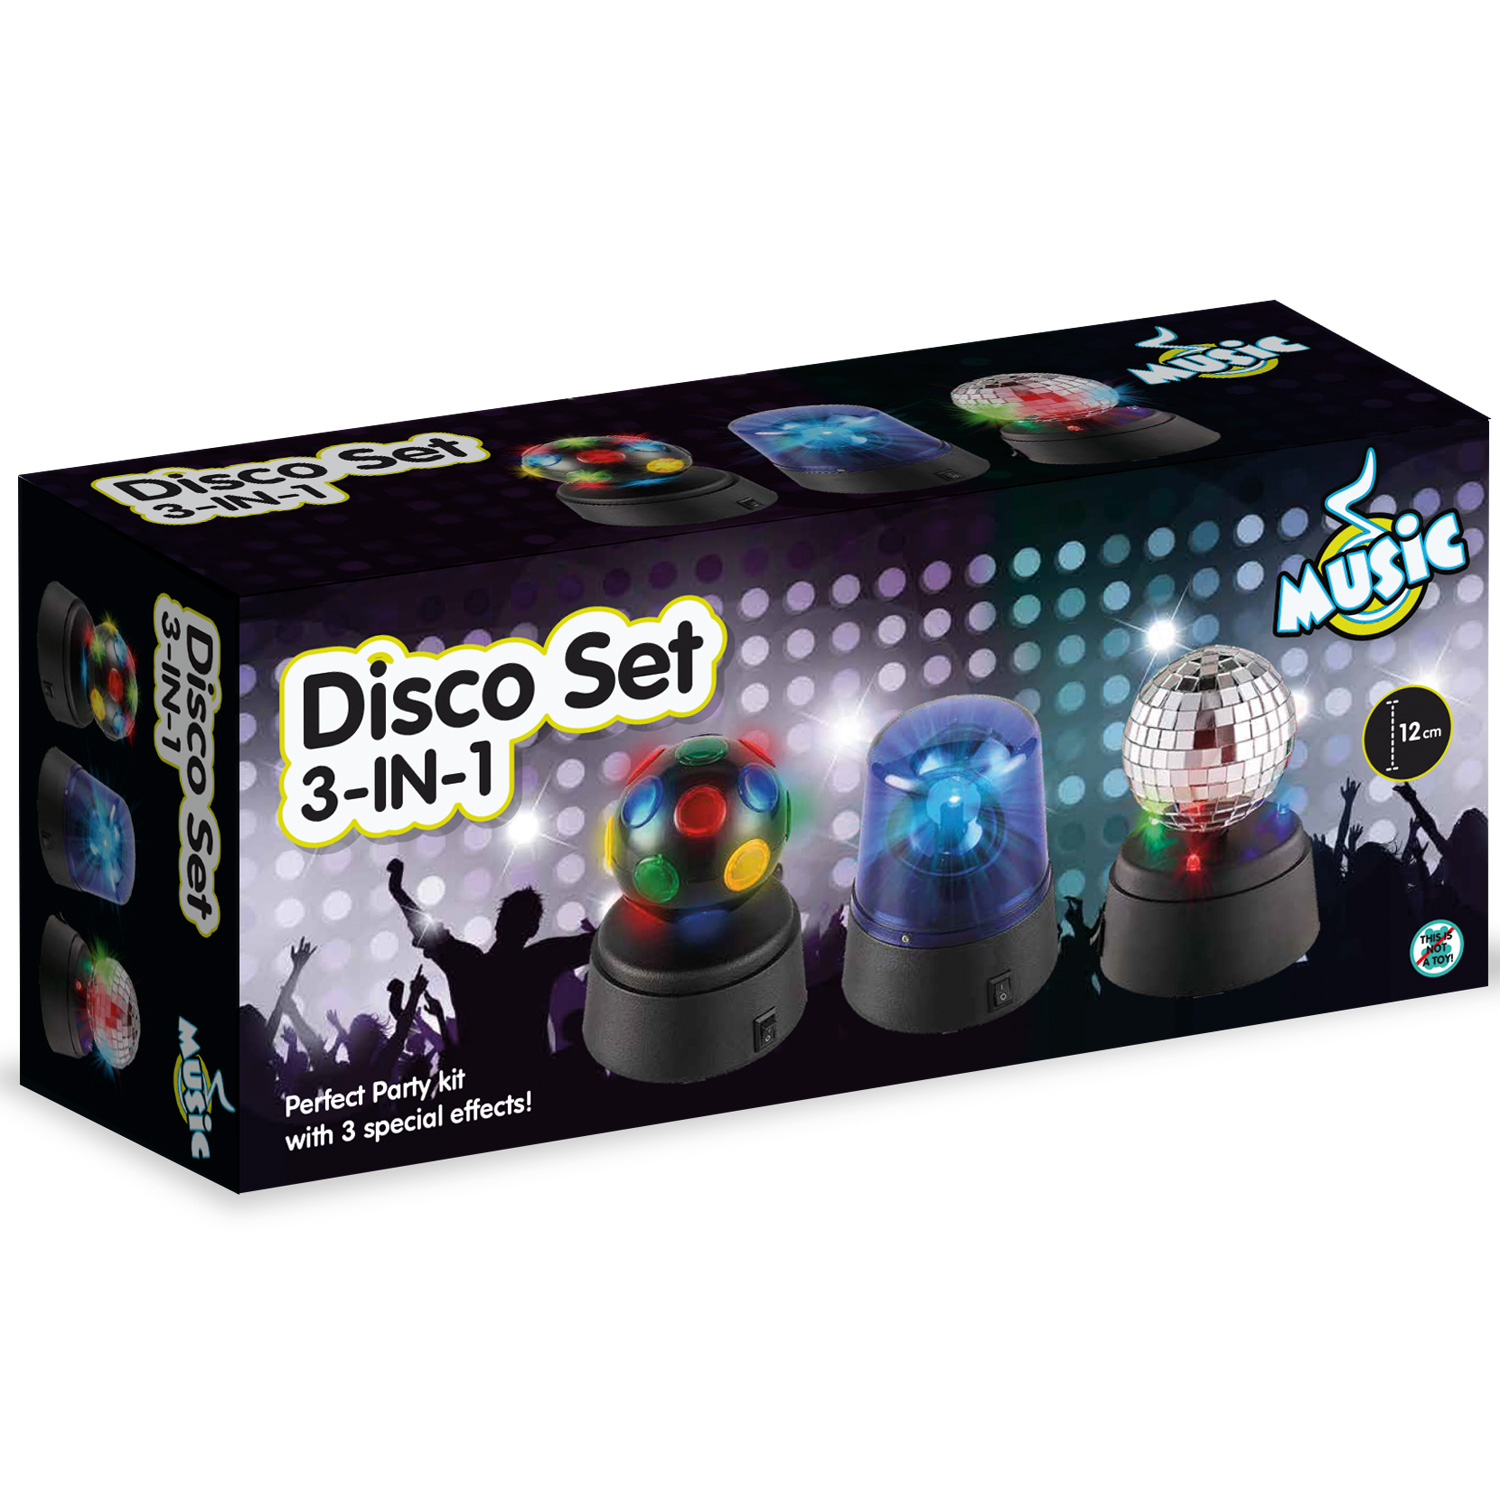 Disco set 3-IN-1